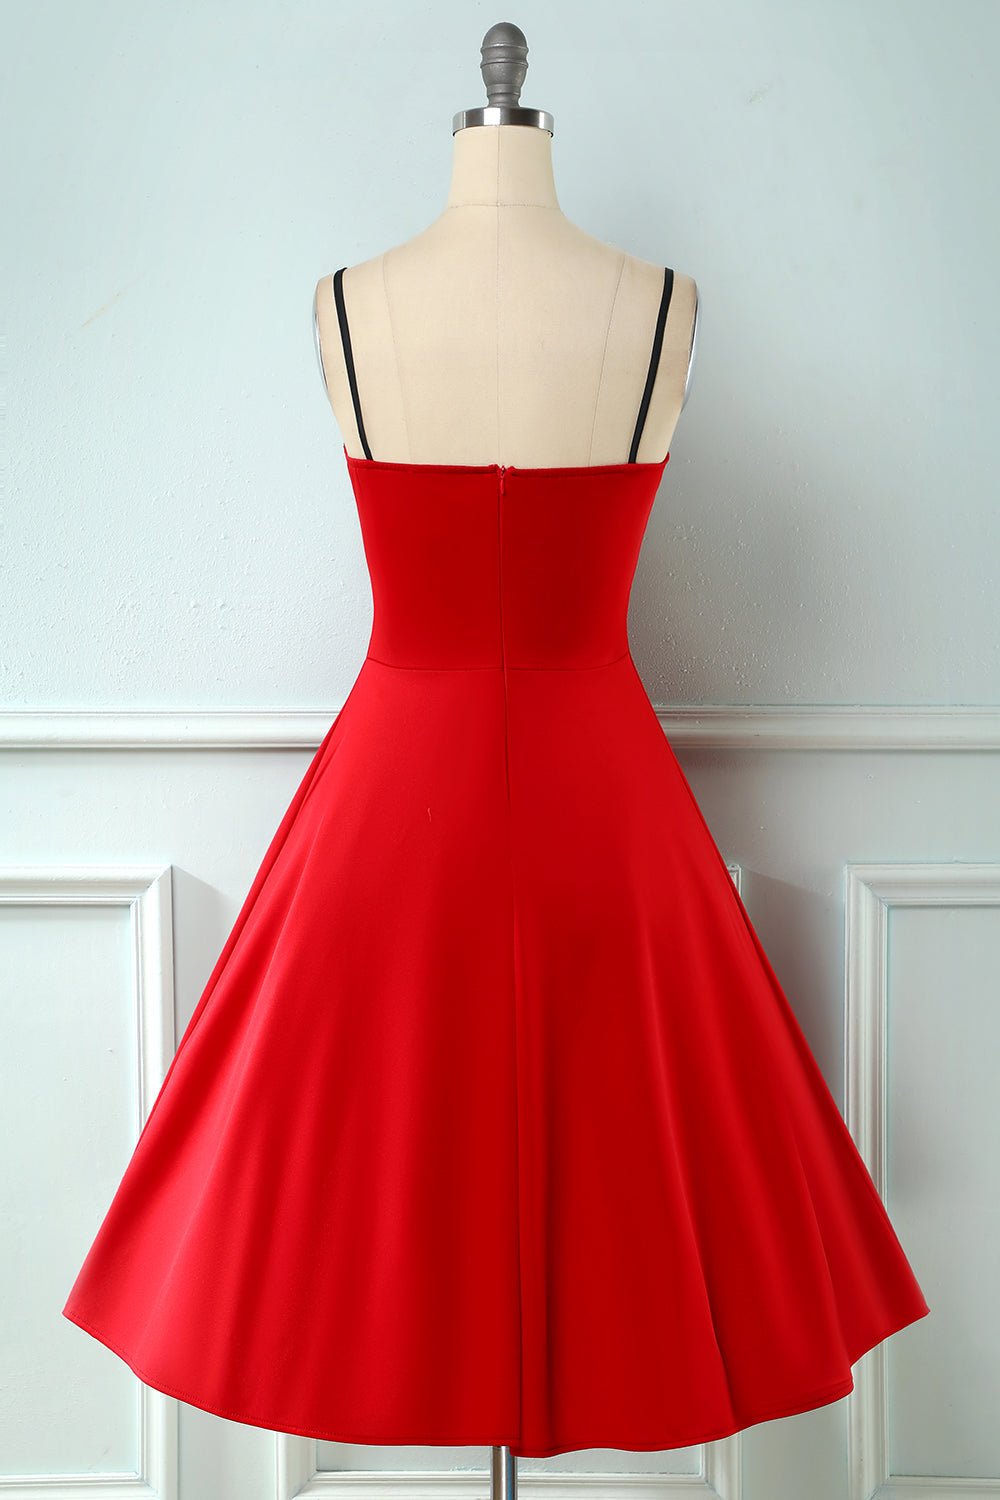 Red Patchwork Star Printed Vintage 1950s Dress